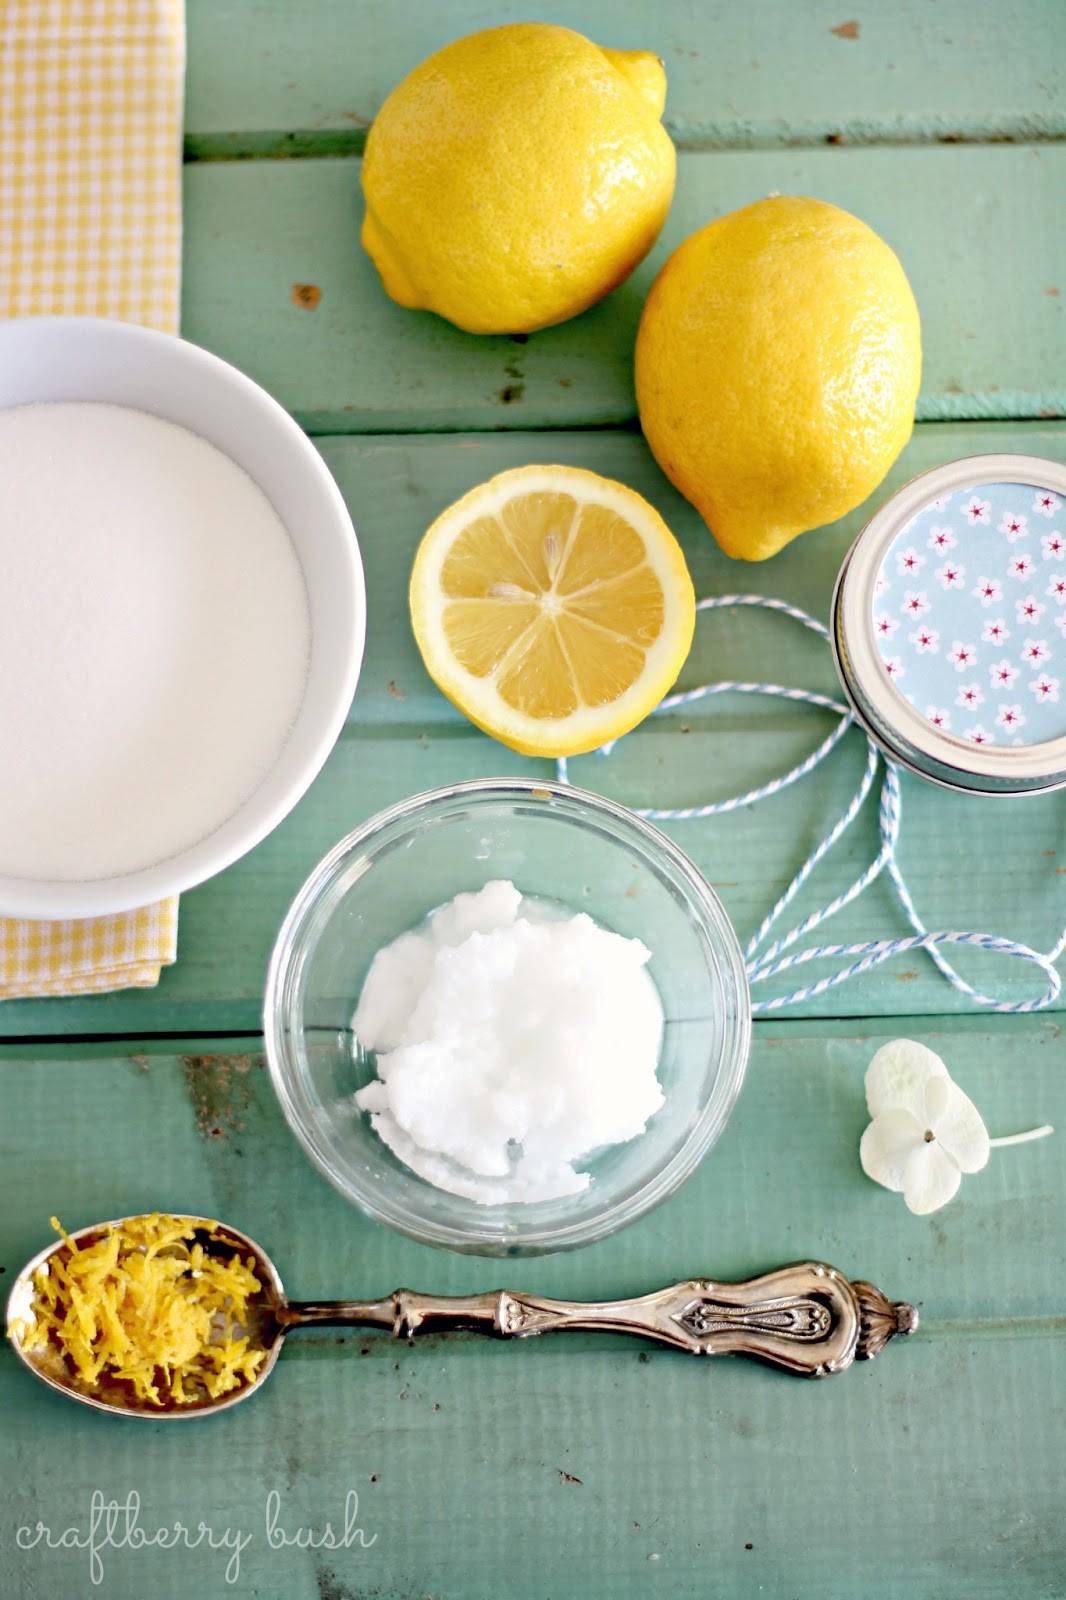 Best ideas about Face Scrub DIY
. Save or Pin Super easy sugar lemon scrub recipe Now.